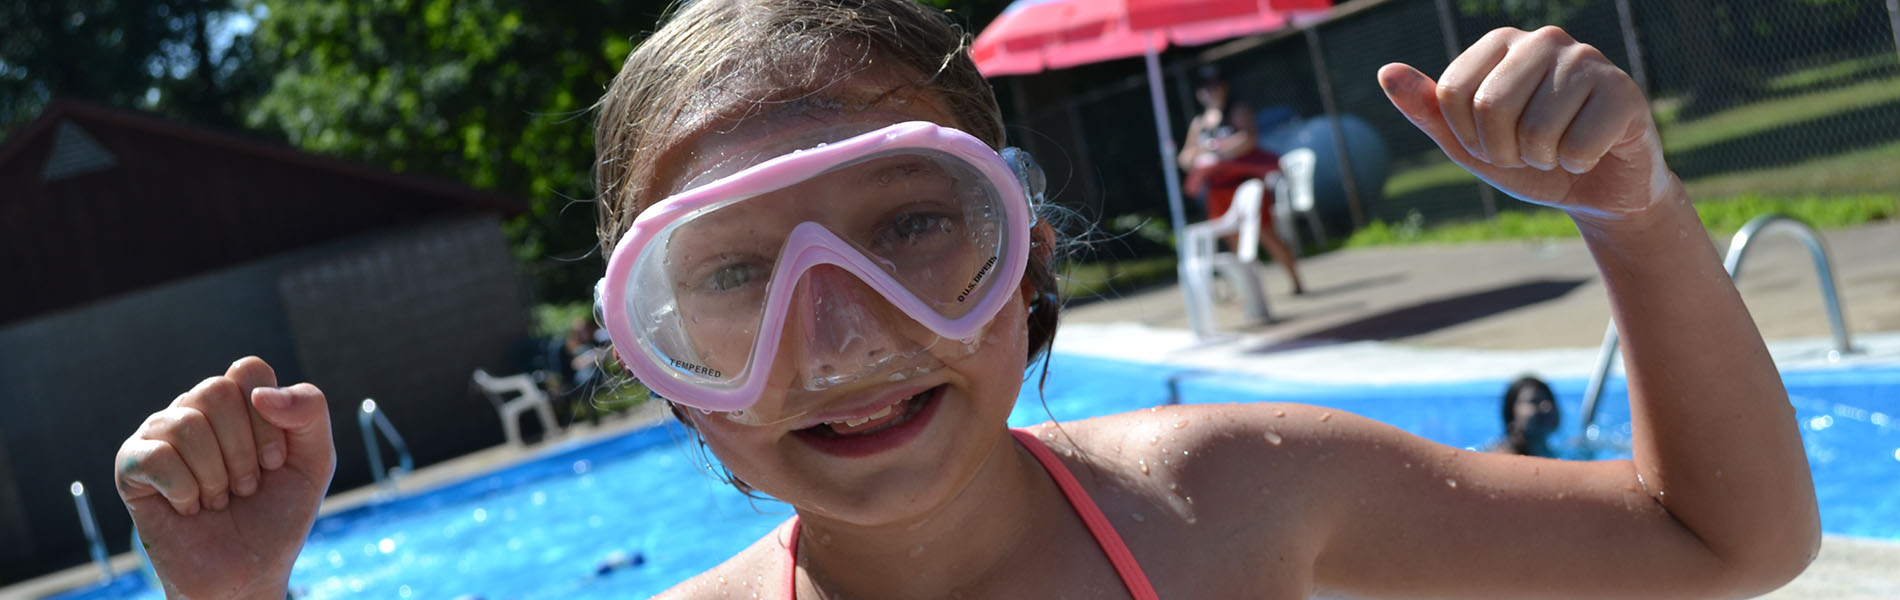 Camper with swim goggles